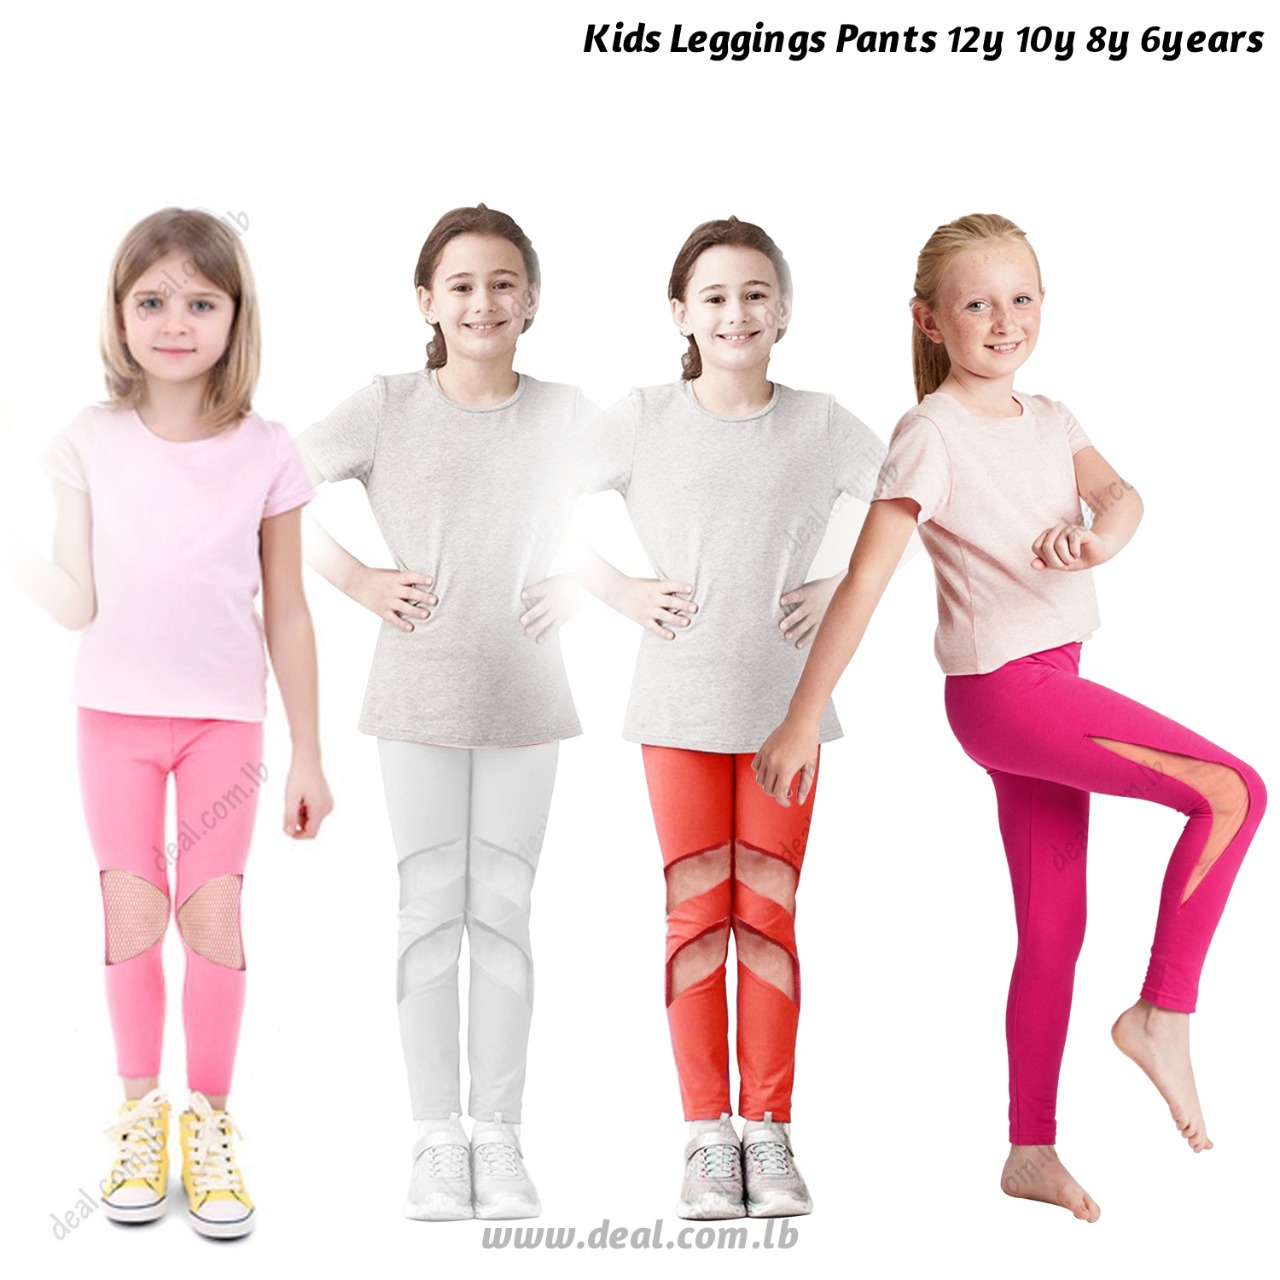 Kids Leggings Pants